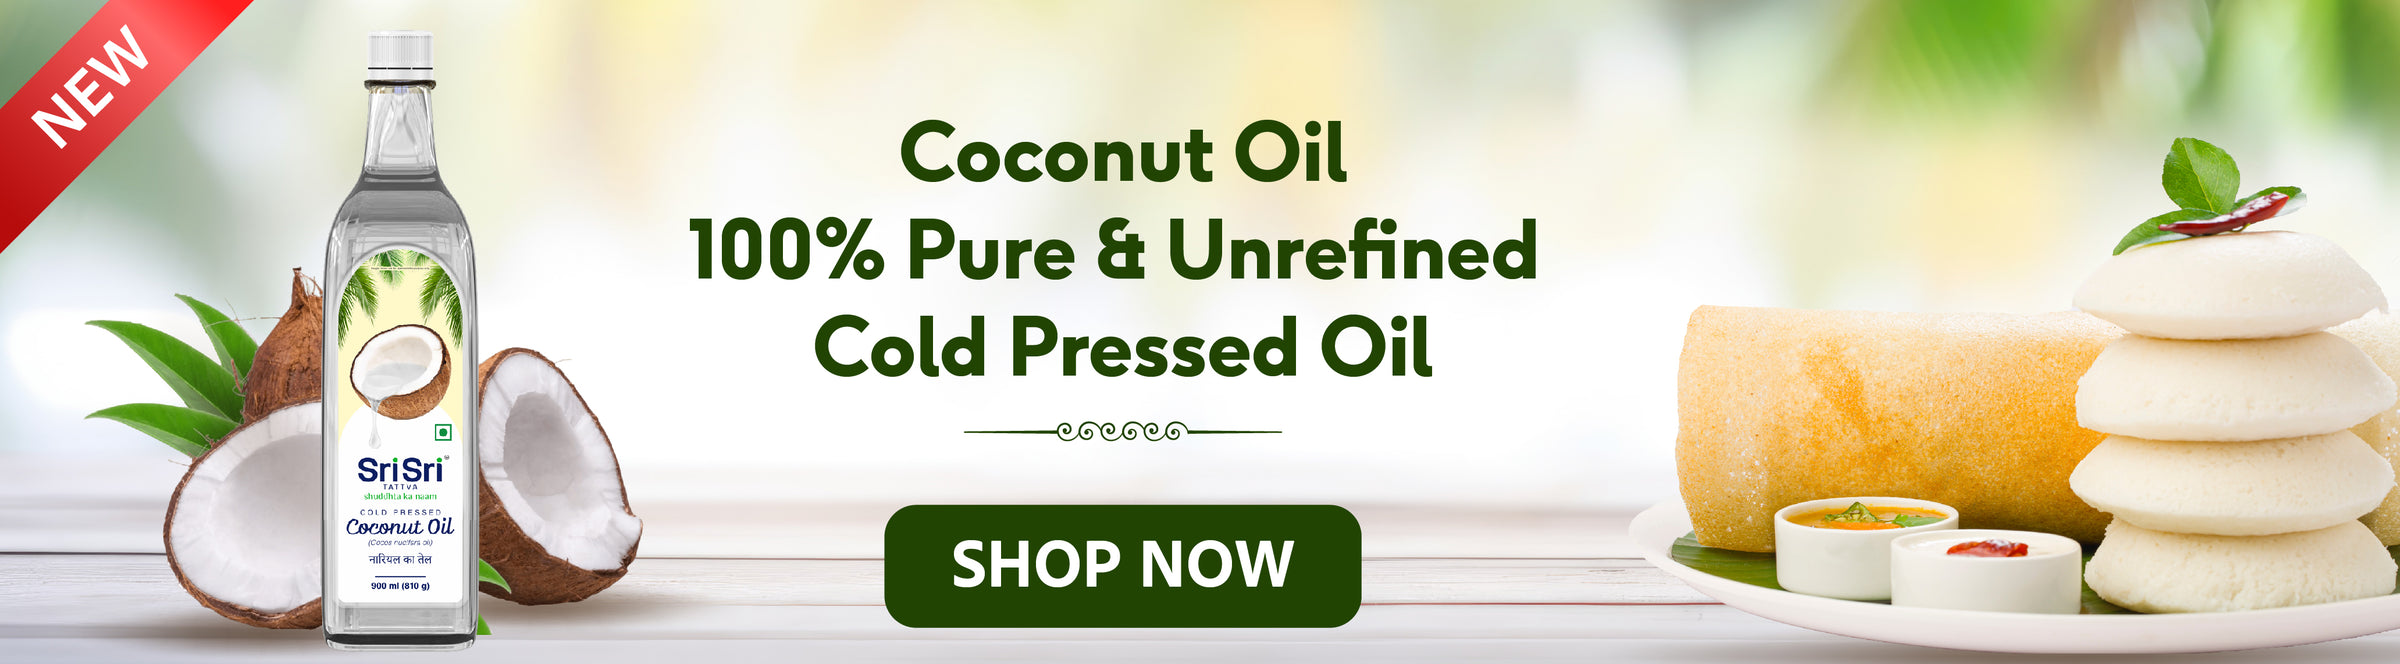 Web banner coconut oil